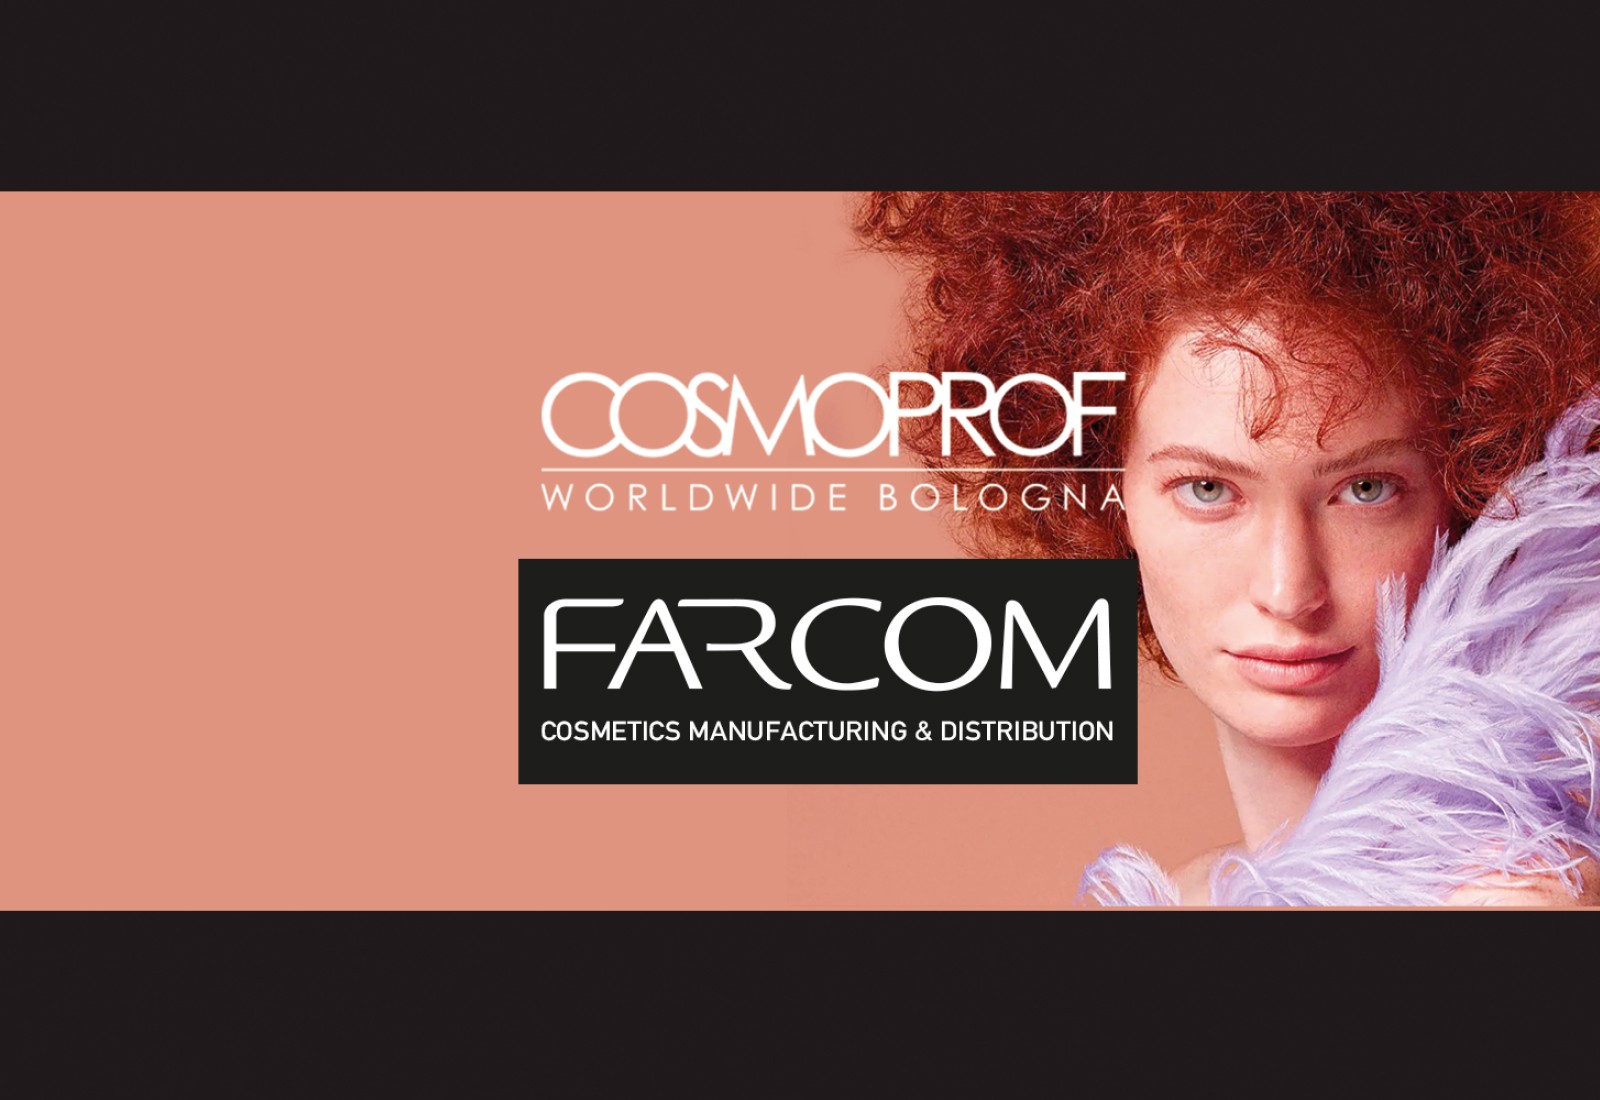 H Farcom στην 54η Cosmoprof Worldwide Bologna